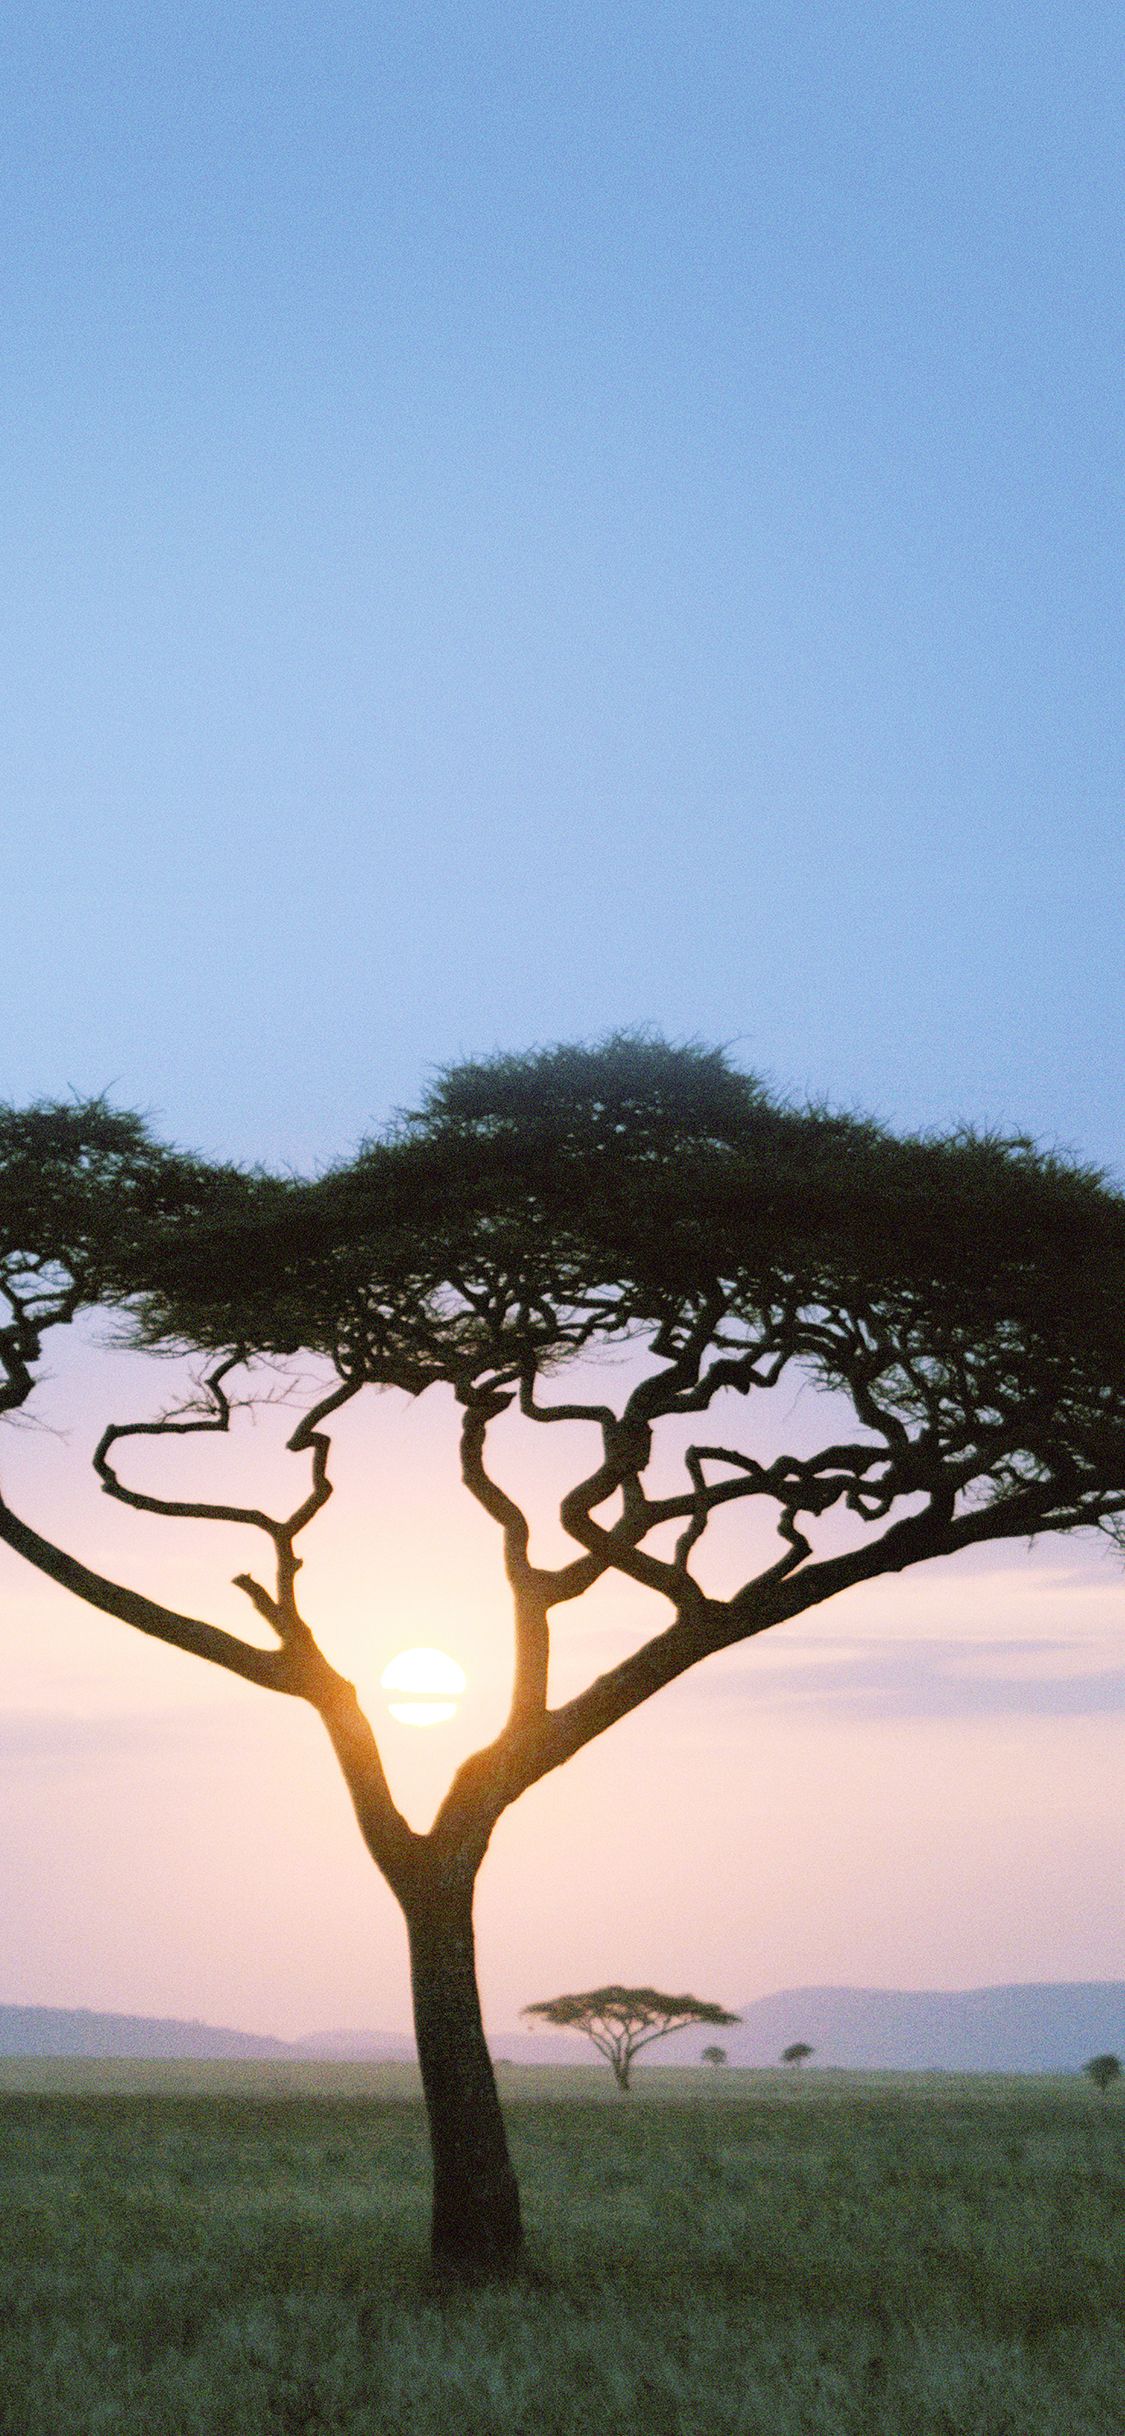 Solo Tree Safari Day Africa Sunrise